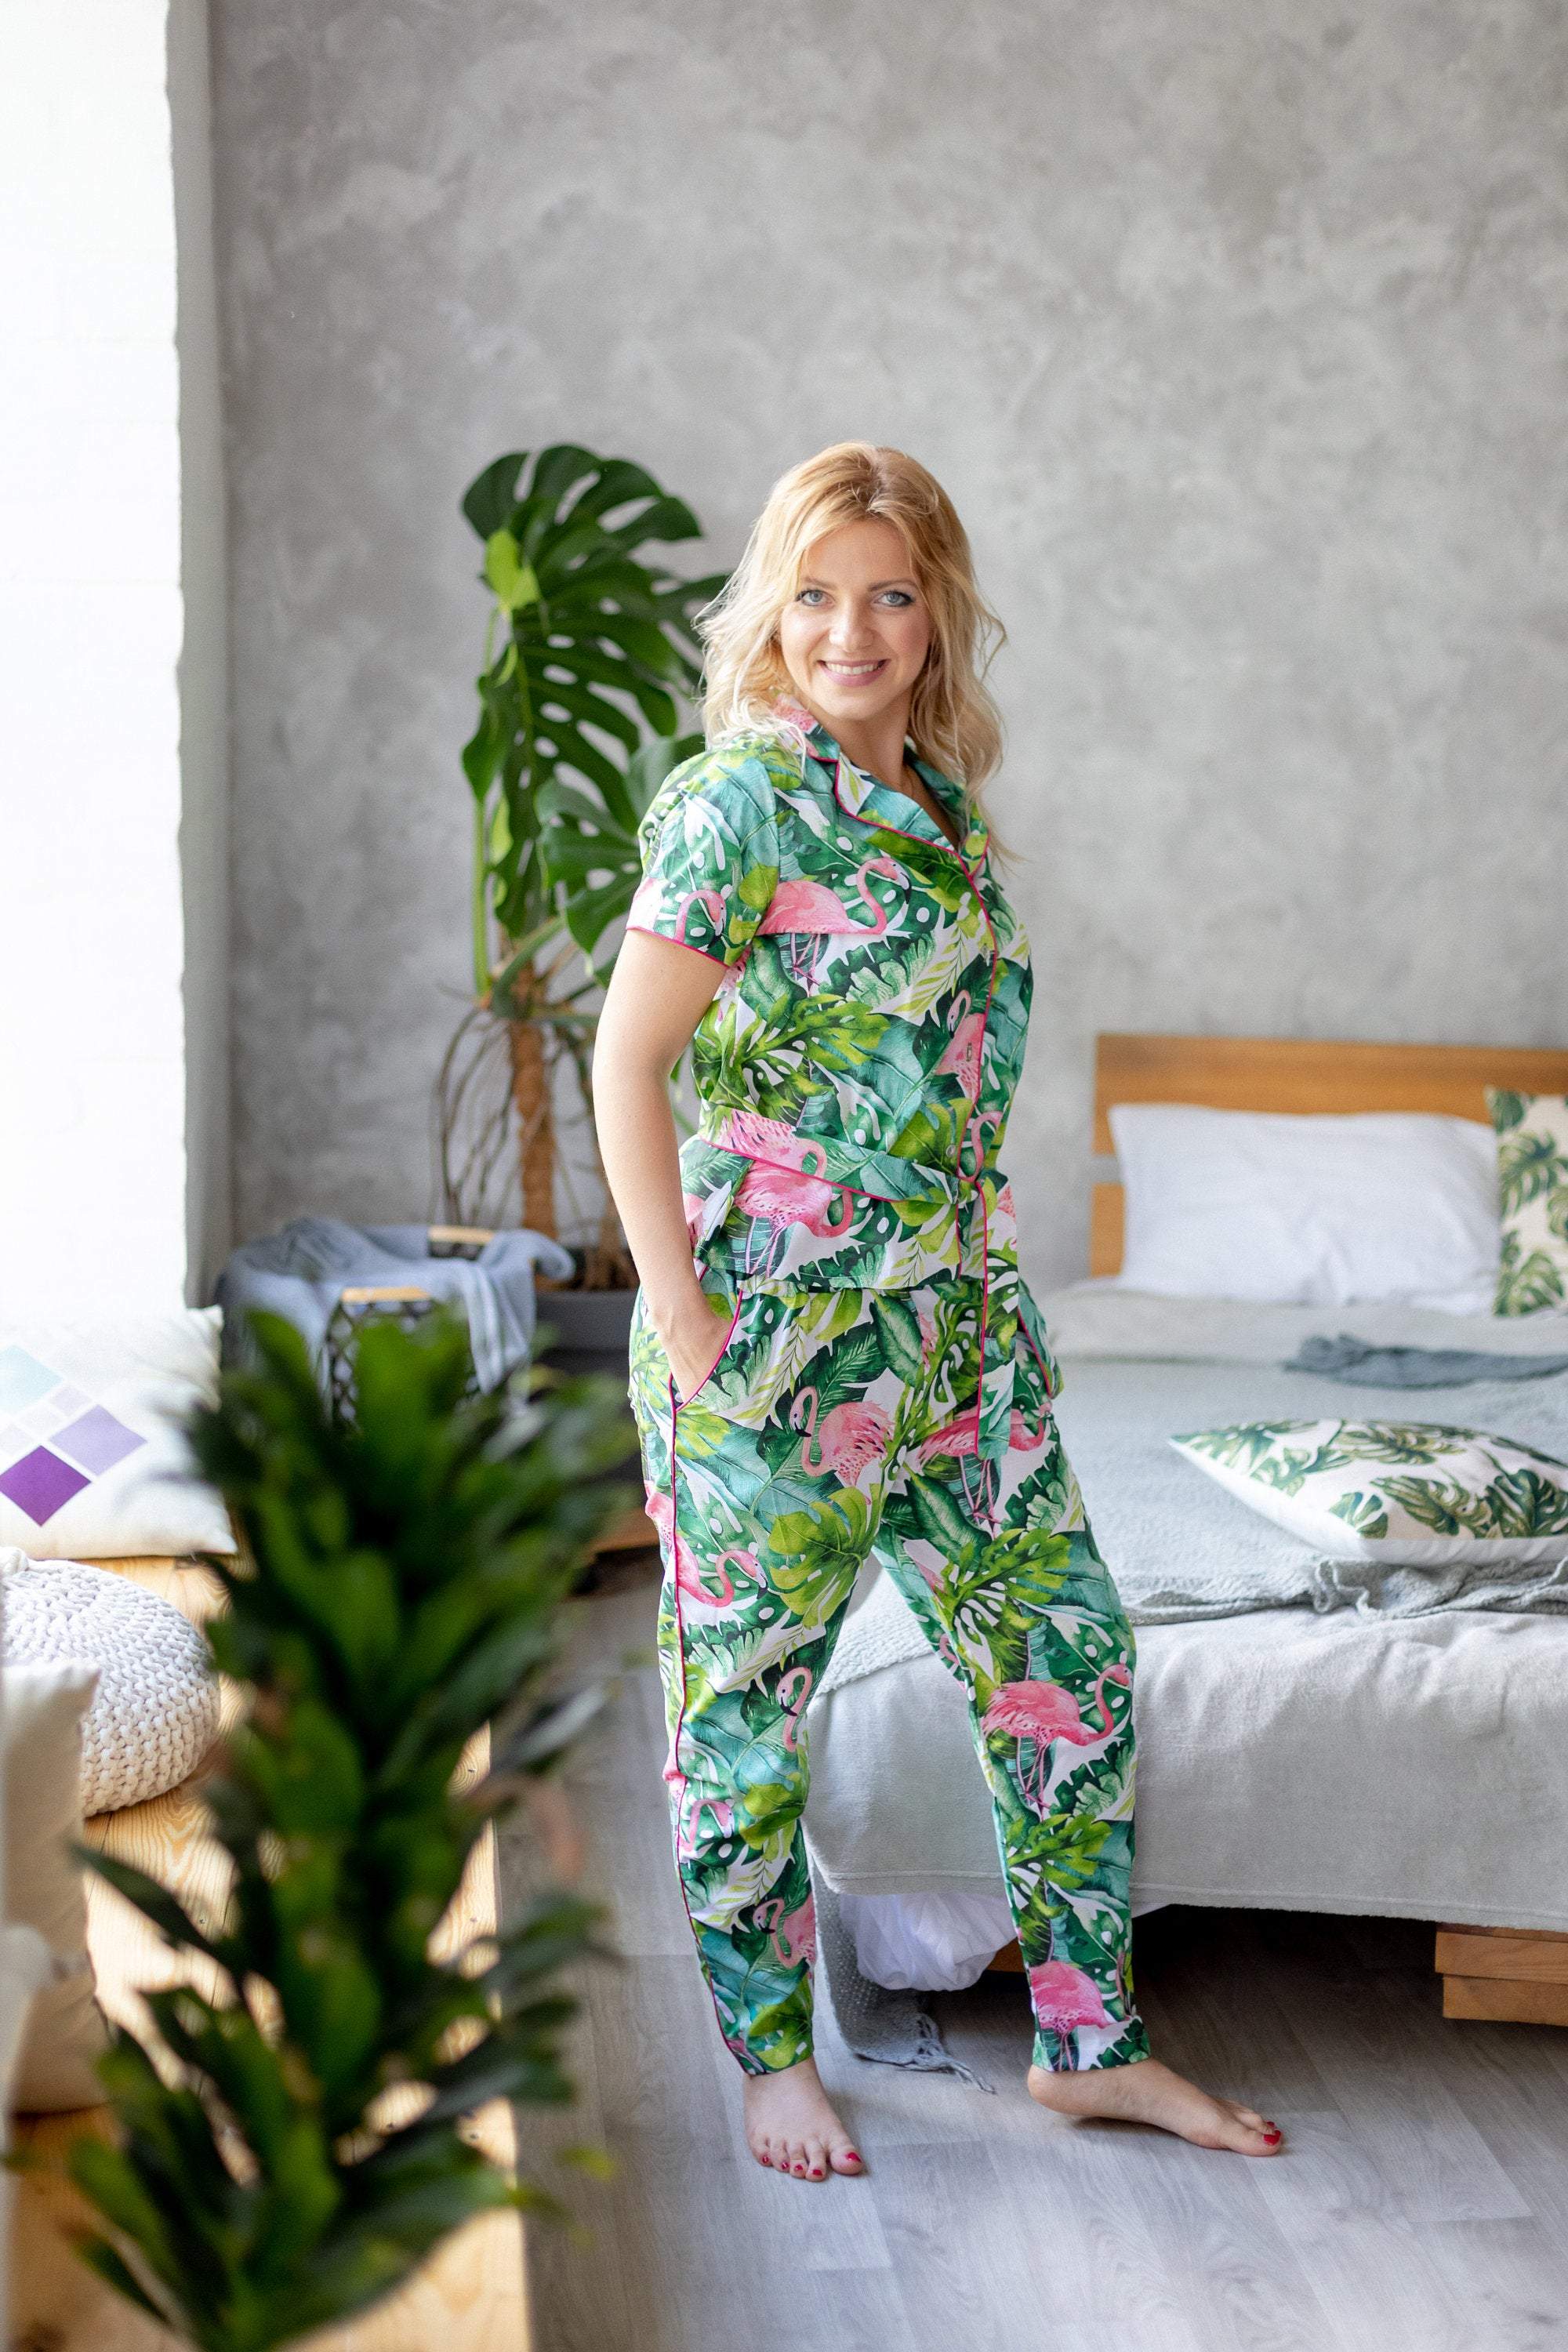 Floral Women's Pajama Sets